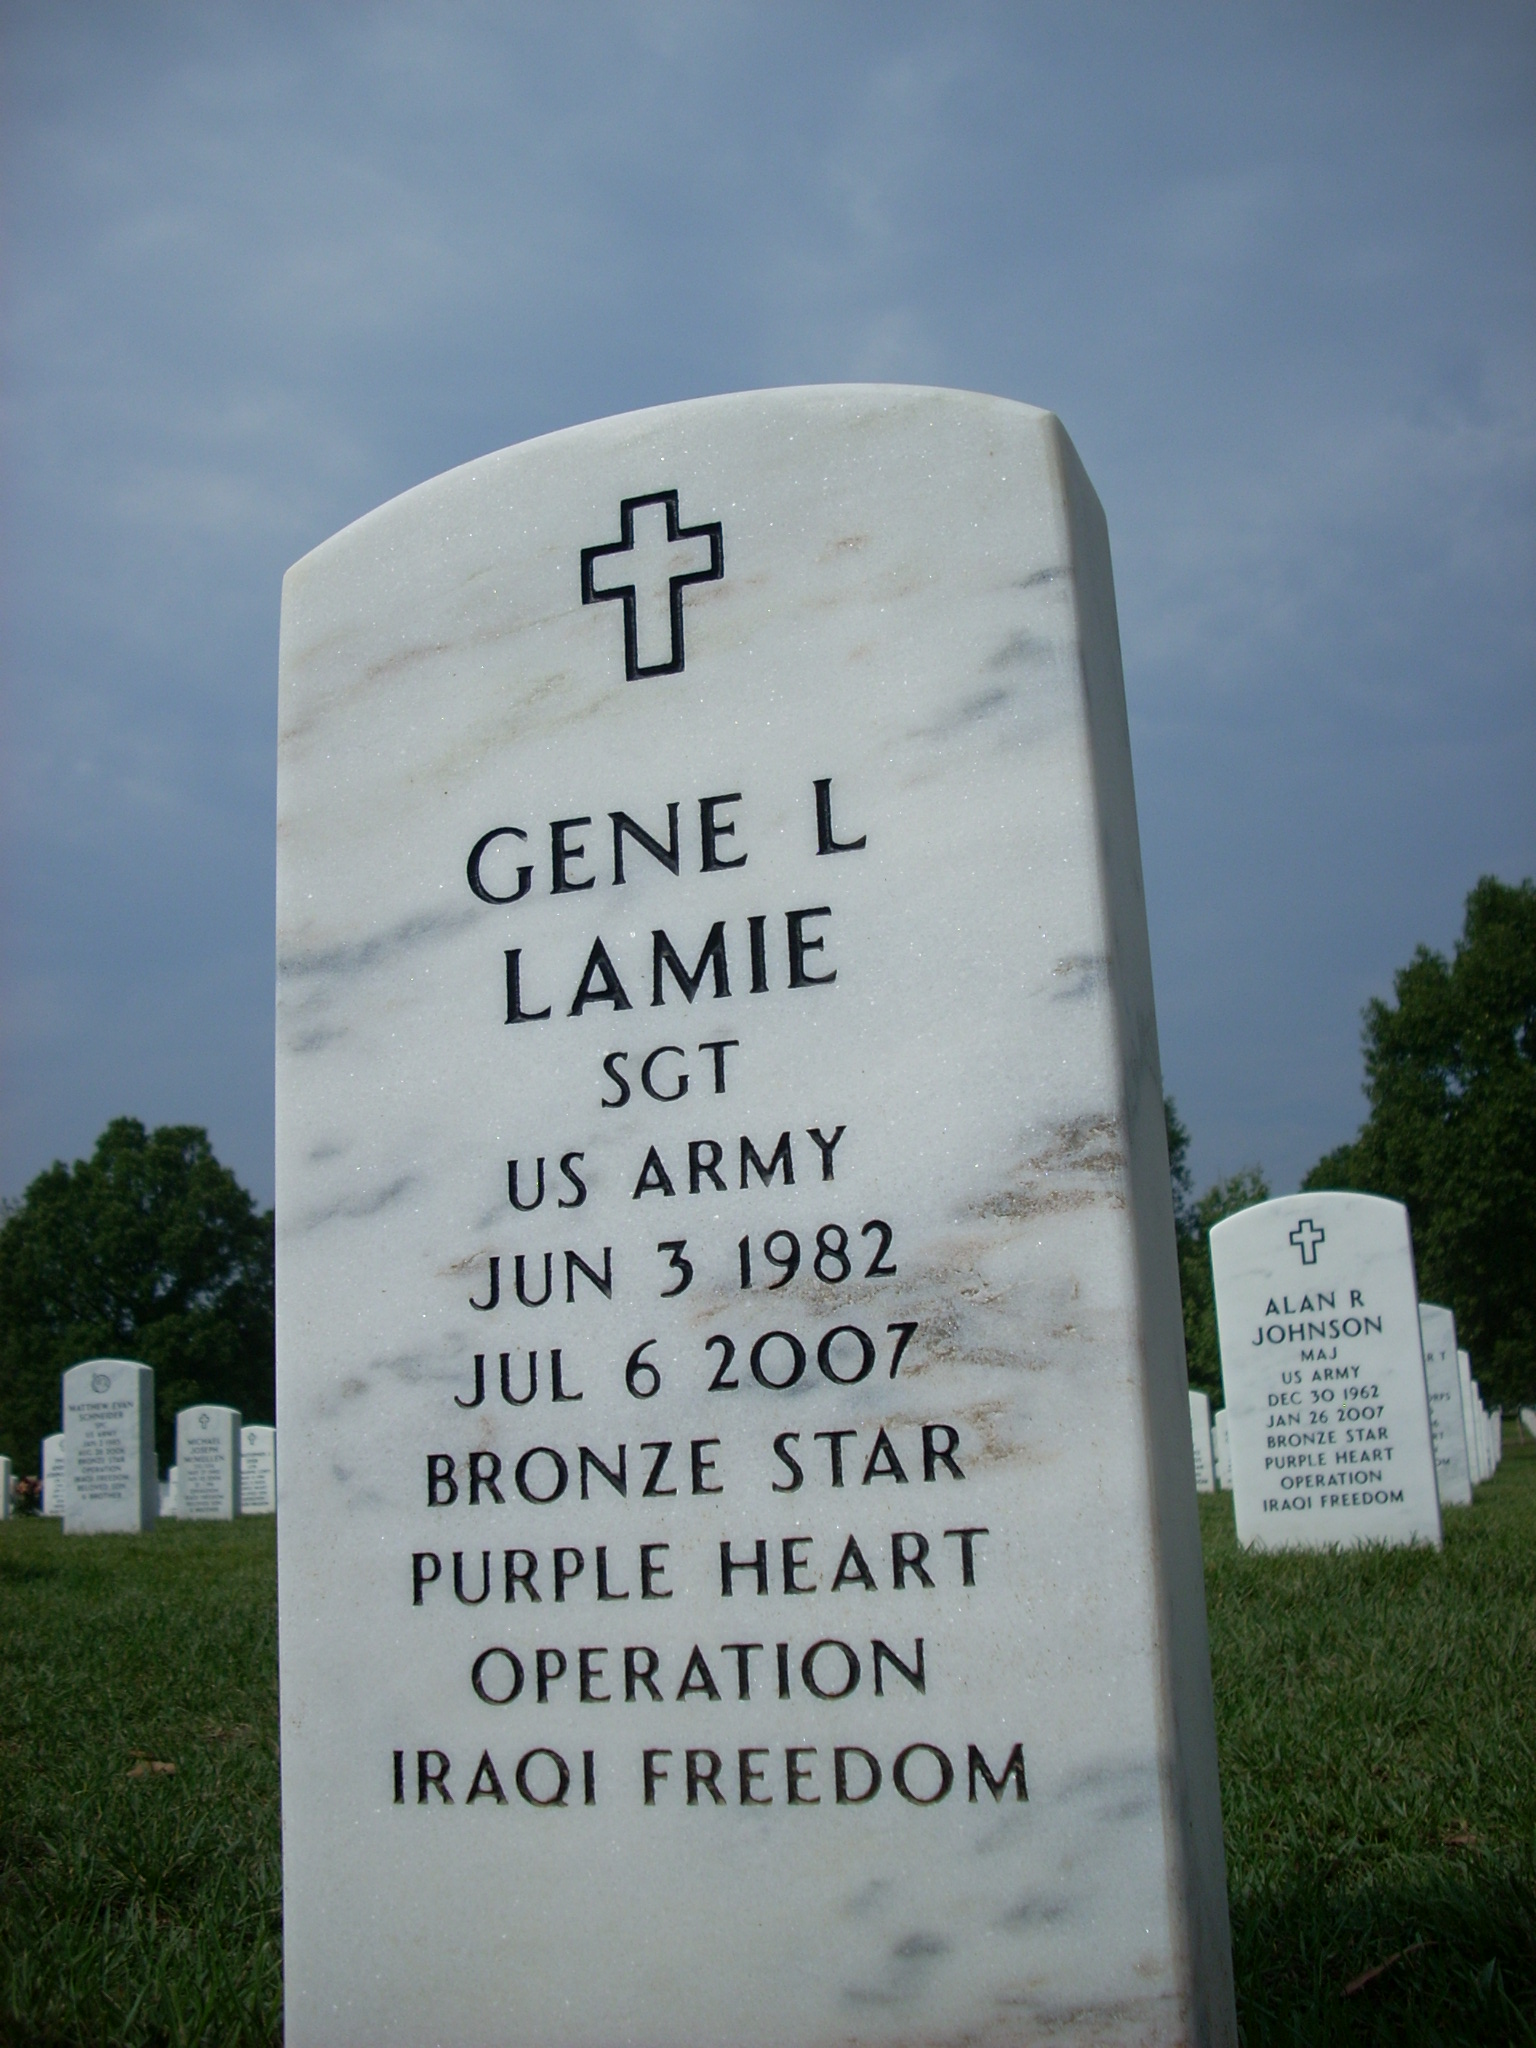 gllamie-gravesite-photo-august-2007-001